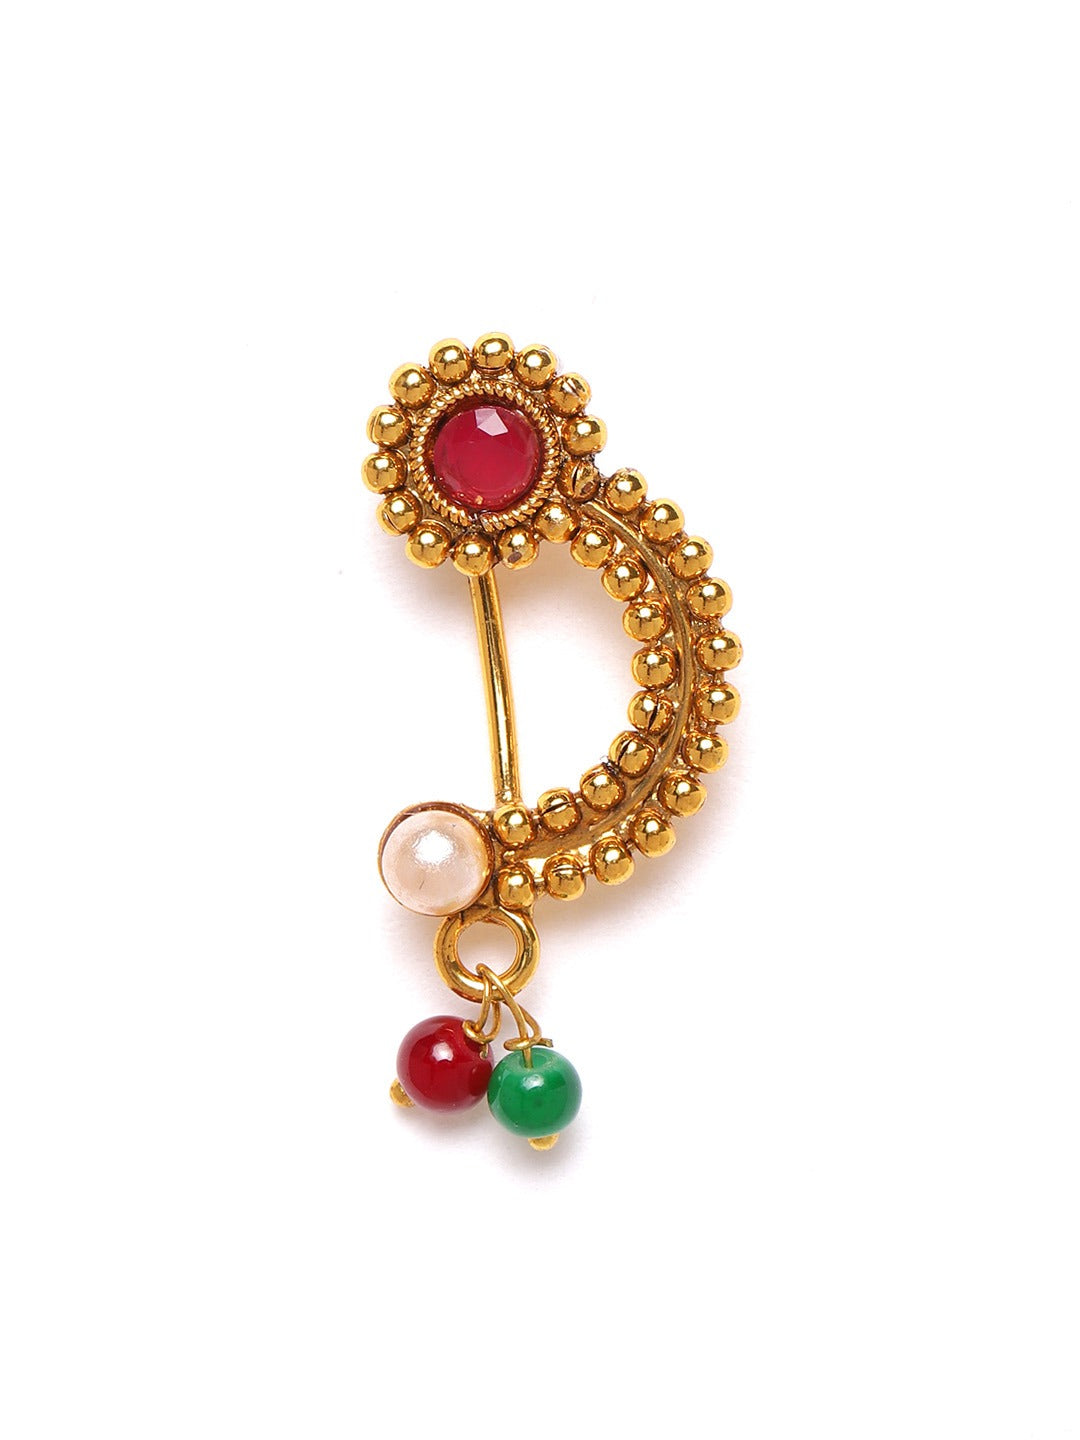 Buy Gargish Maharashtrian jewellery traditional nath nose ring Without Piercing  Marathi Nose Pin For Women (Design 1) at Amazon.in